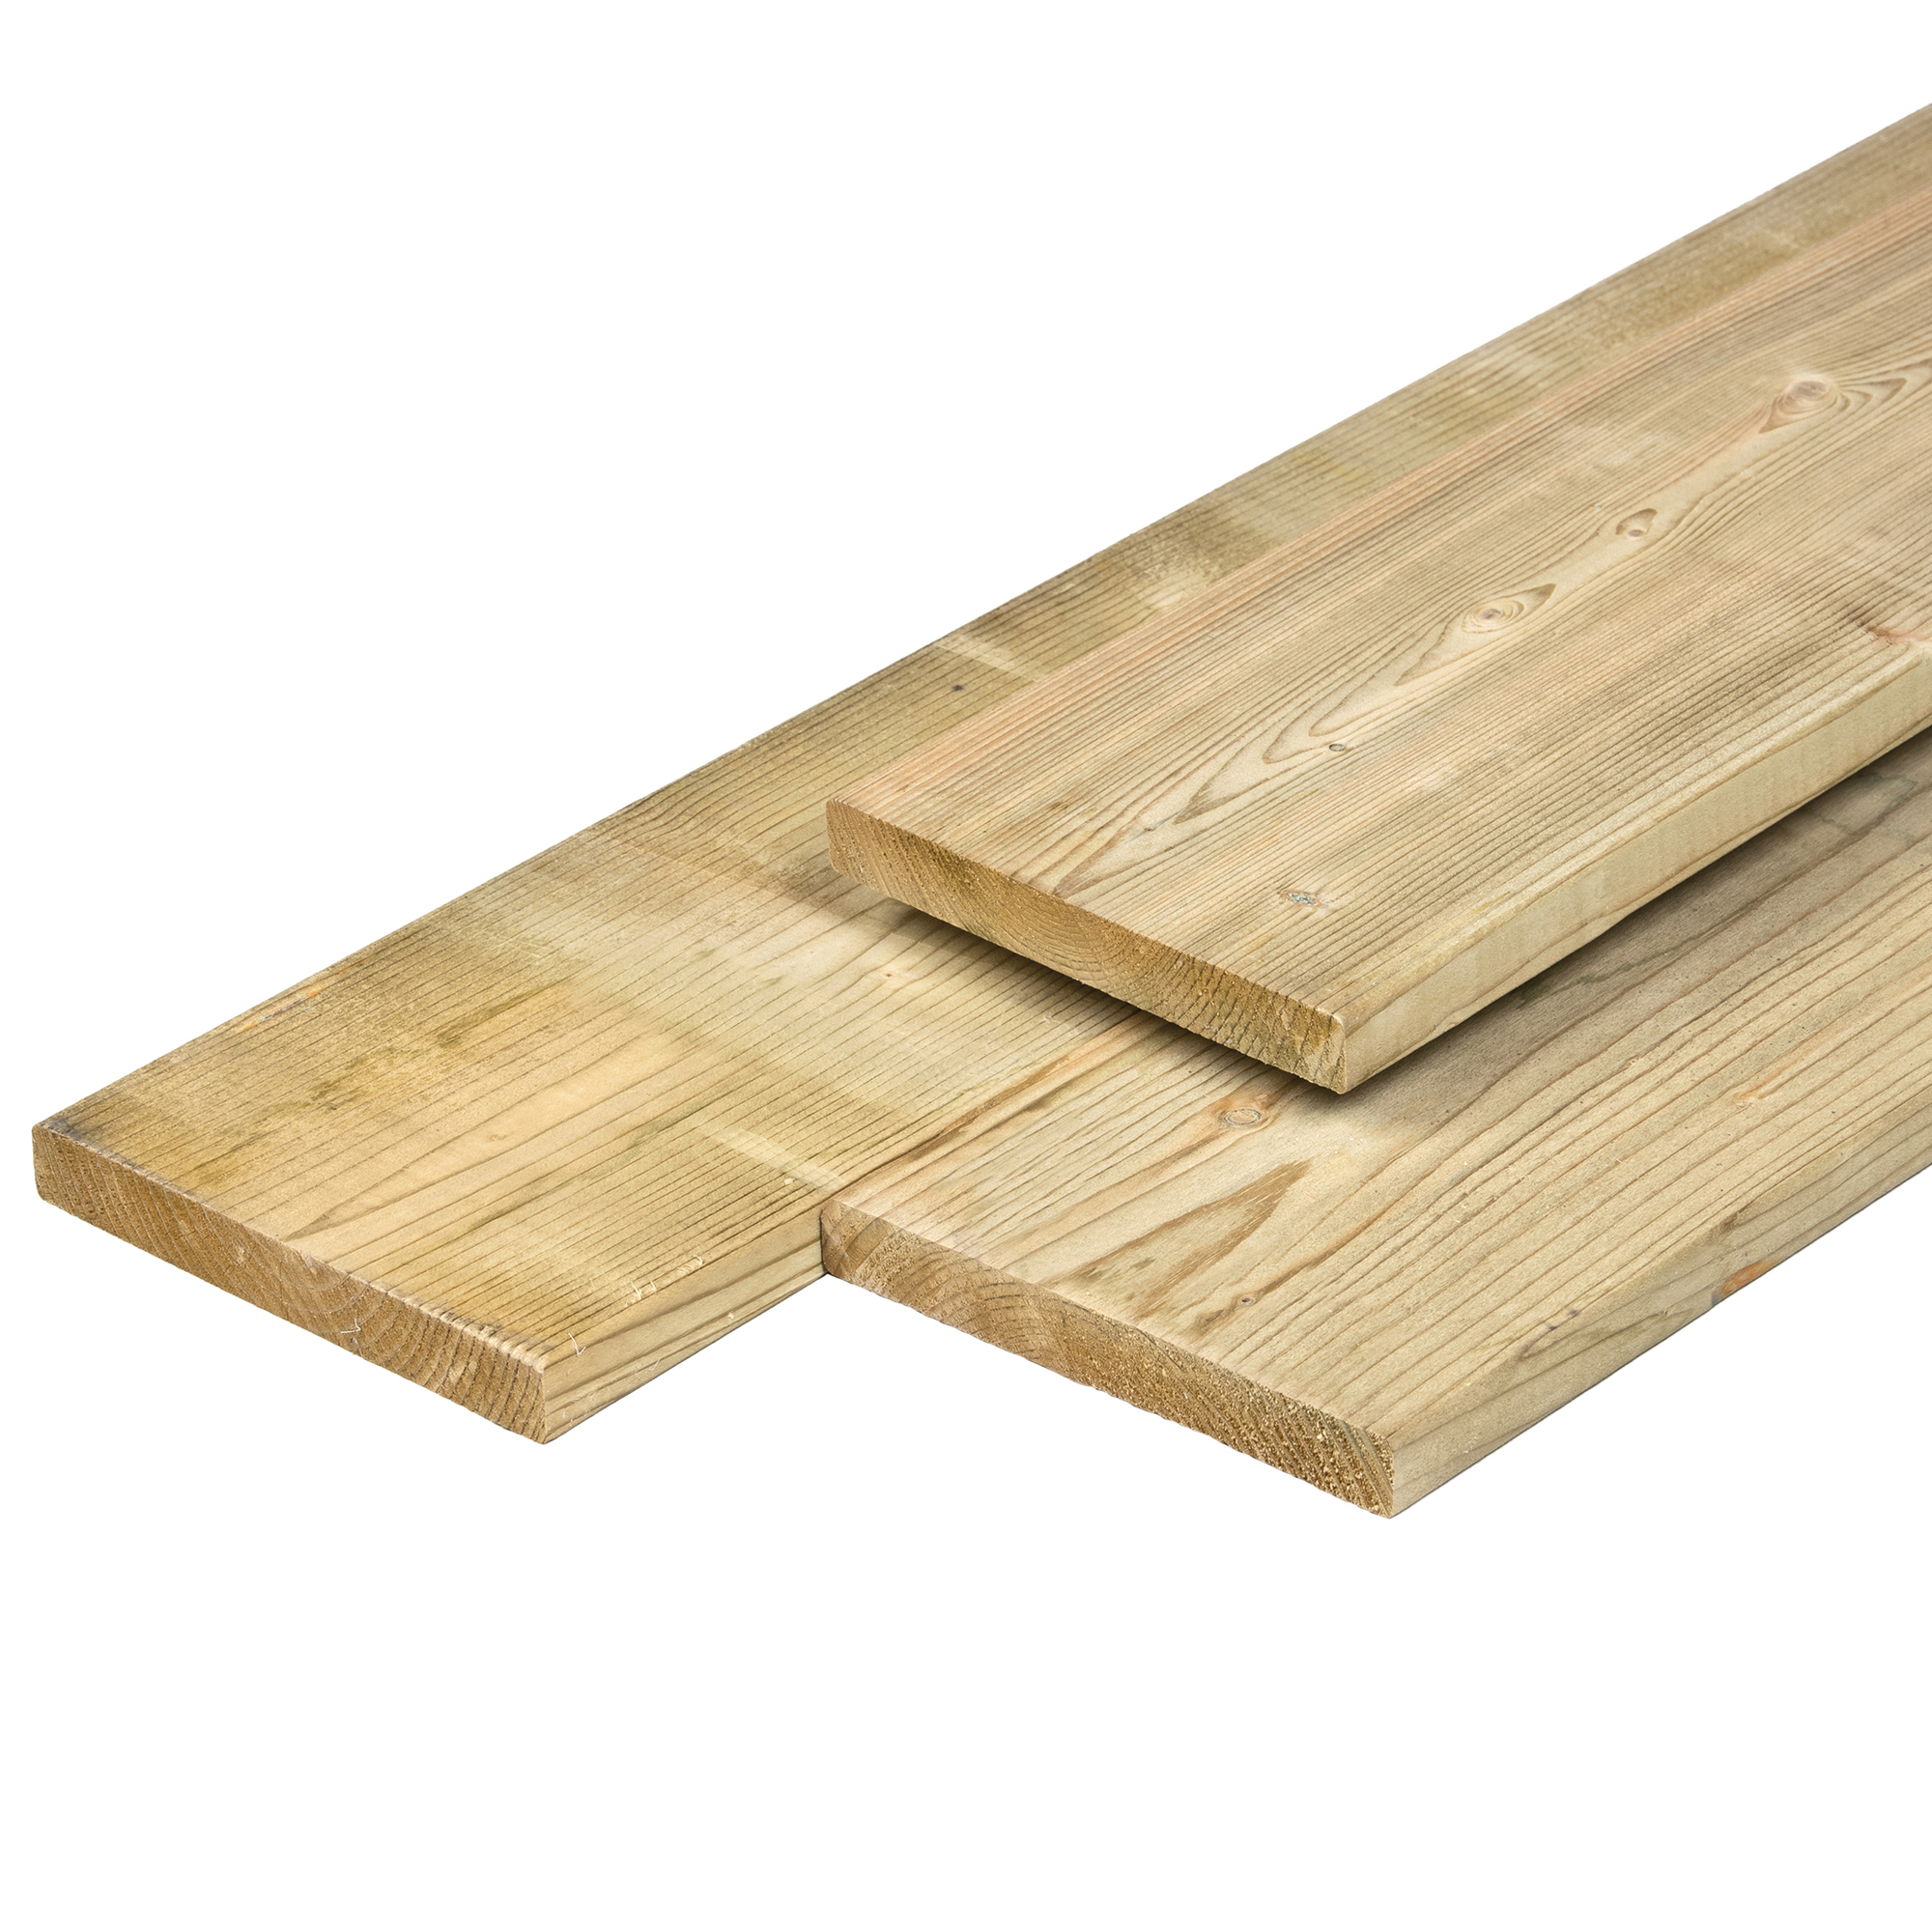 Plank NE vuren 1.8x14.5x510cm